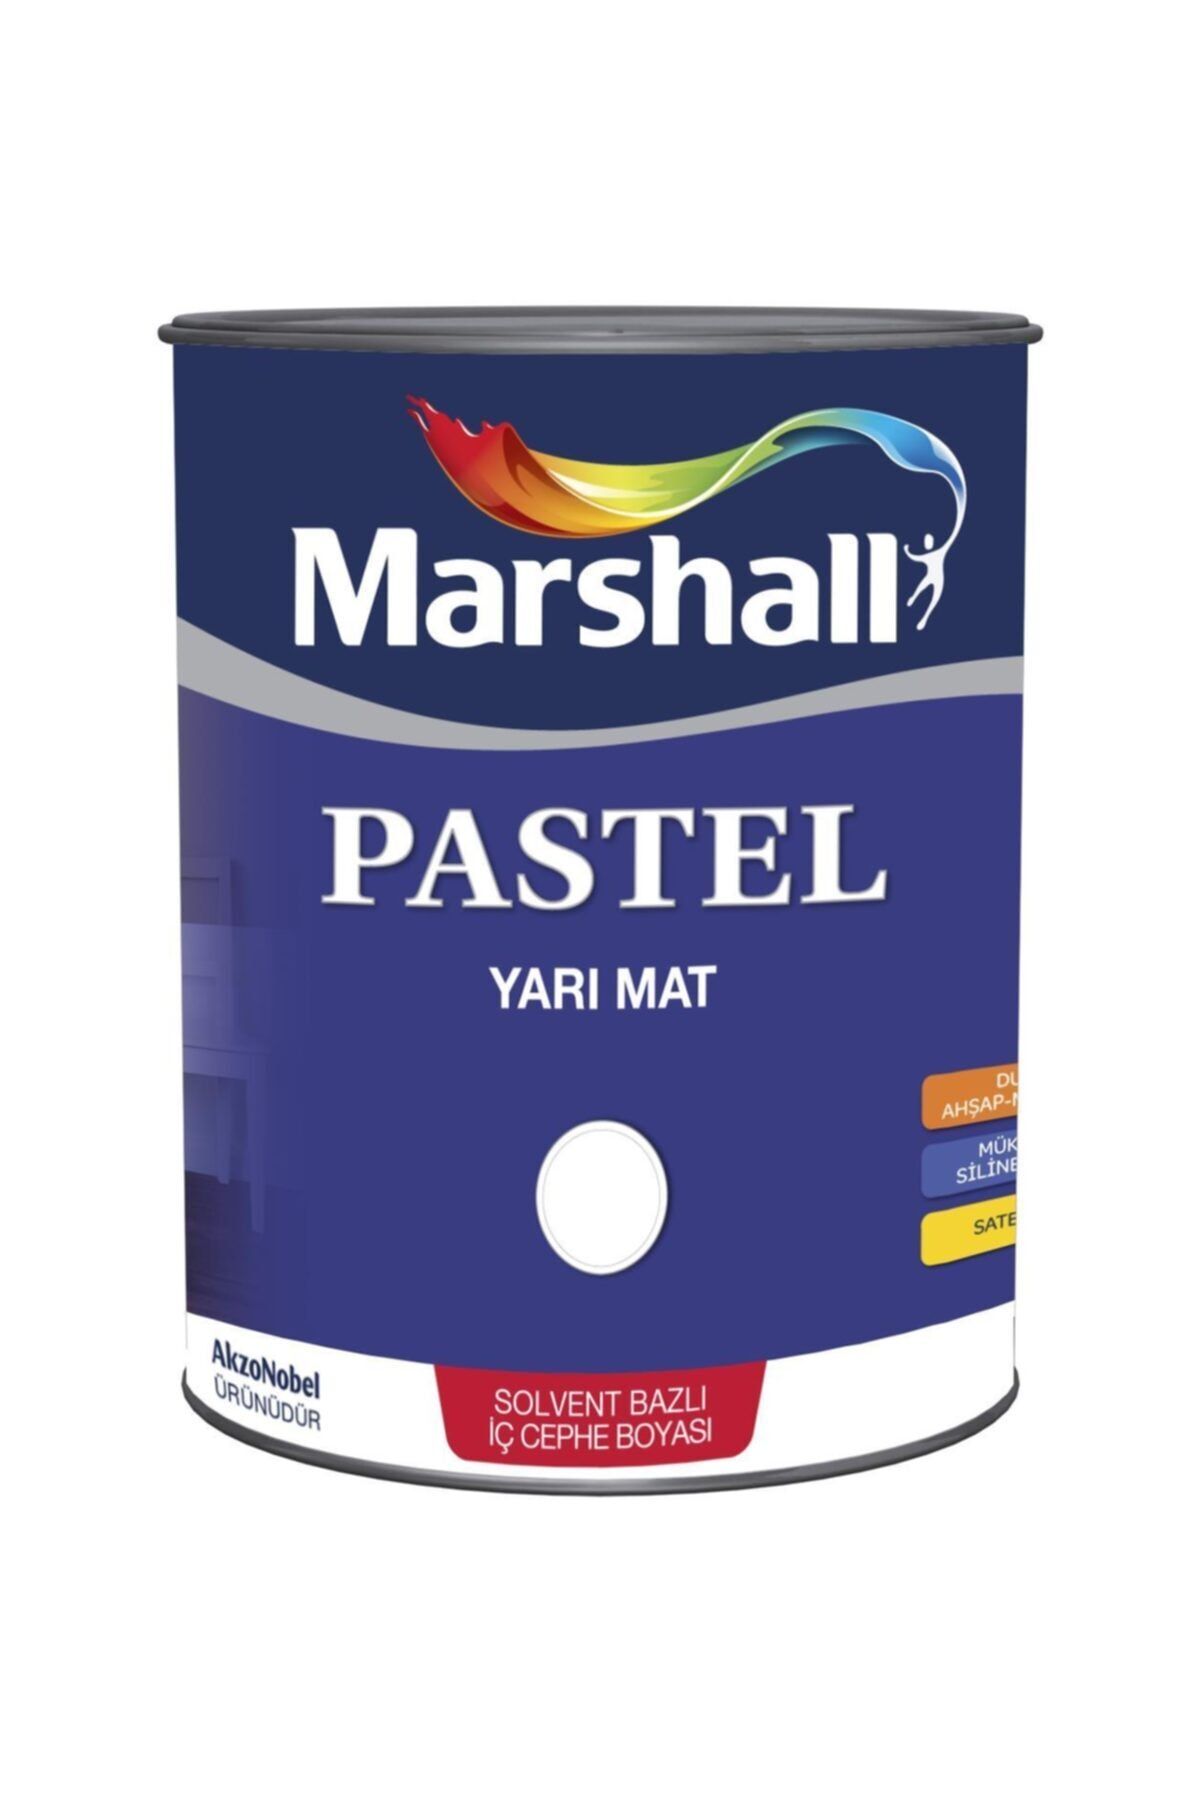 Marshall Pastel Yarı Mat Sentetik Boya 2.5 L Çakıl Taşı